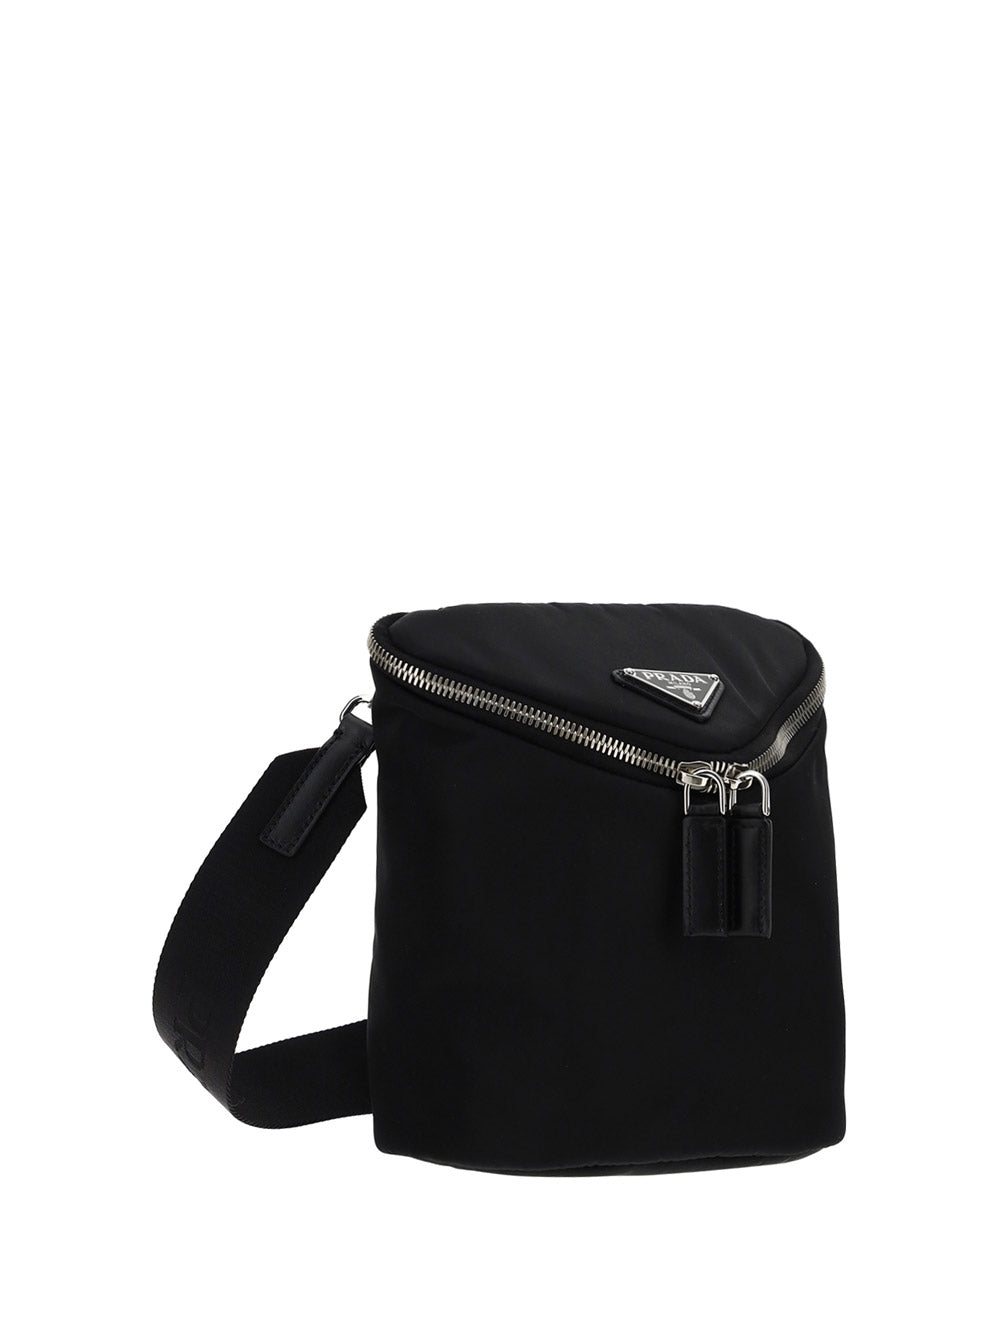 Black Arqué leather-trim Re-Nylon shoulder bag, Prada